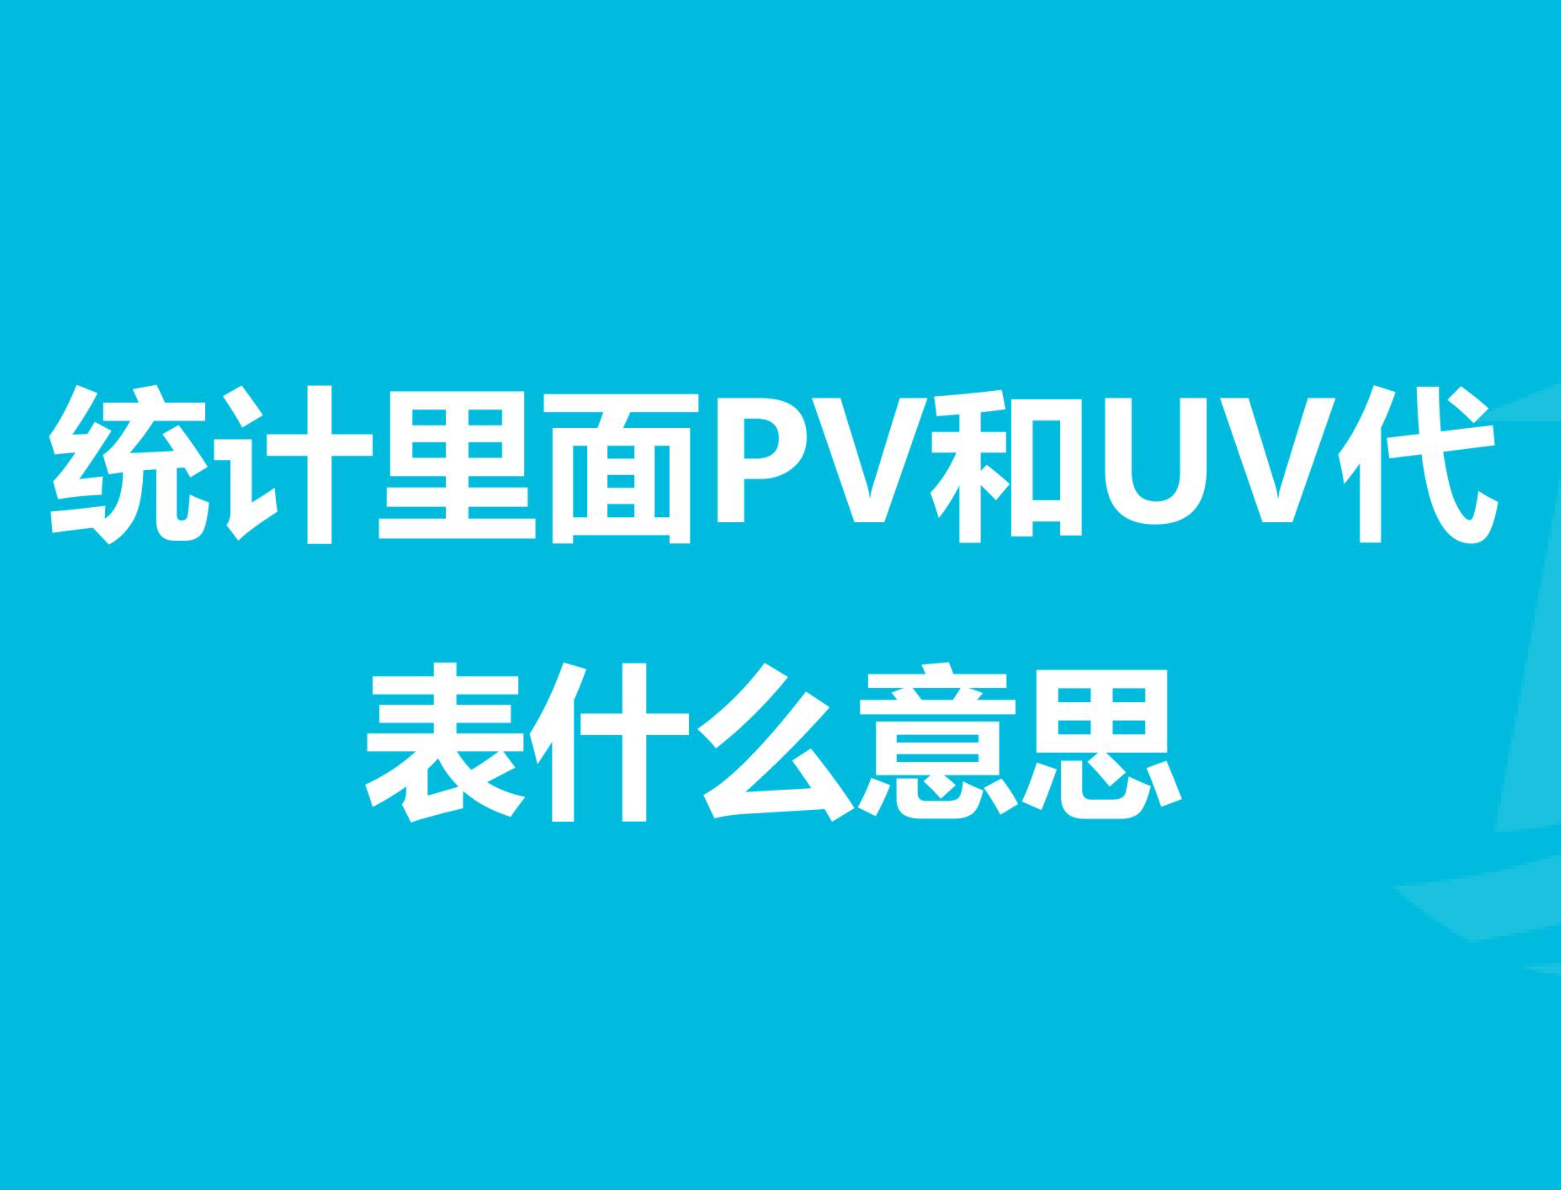 PV和UV你是否一直傻傻分不清？看一遍你就记住了。